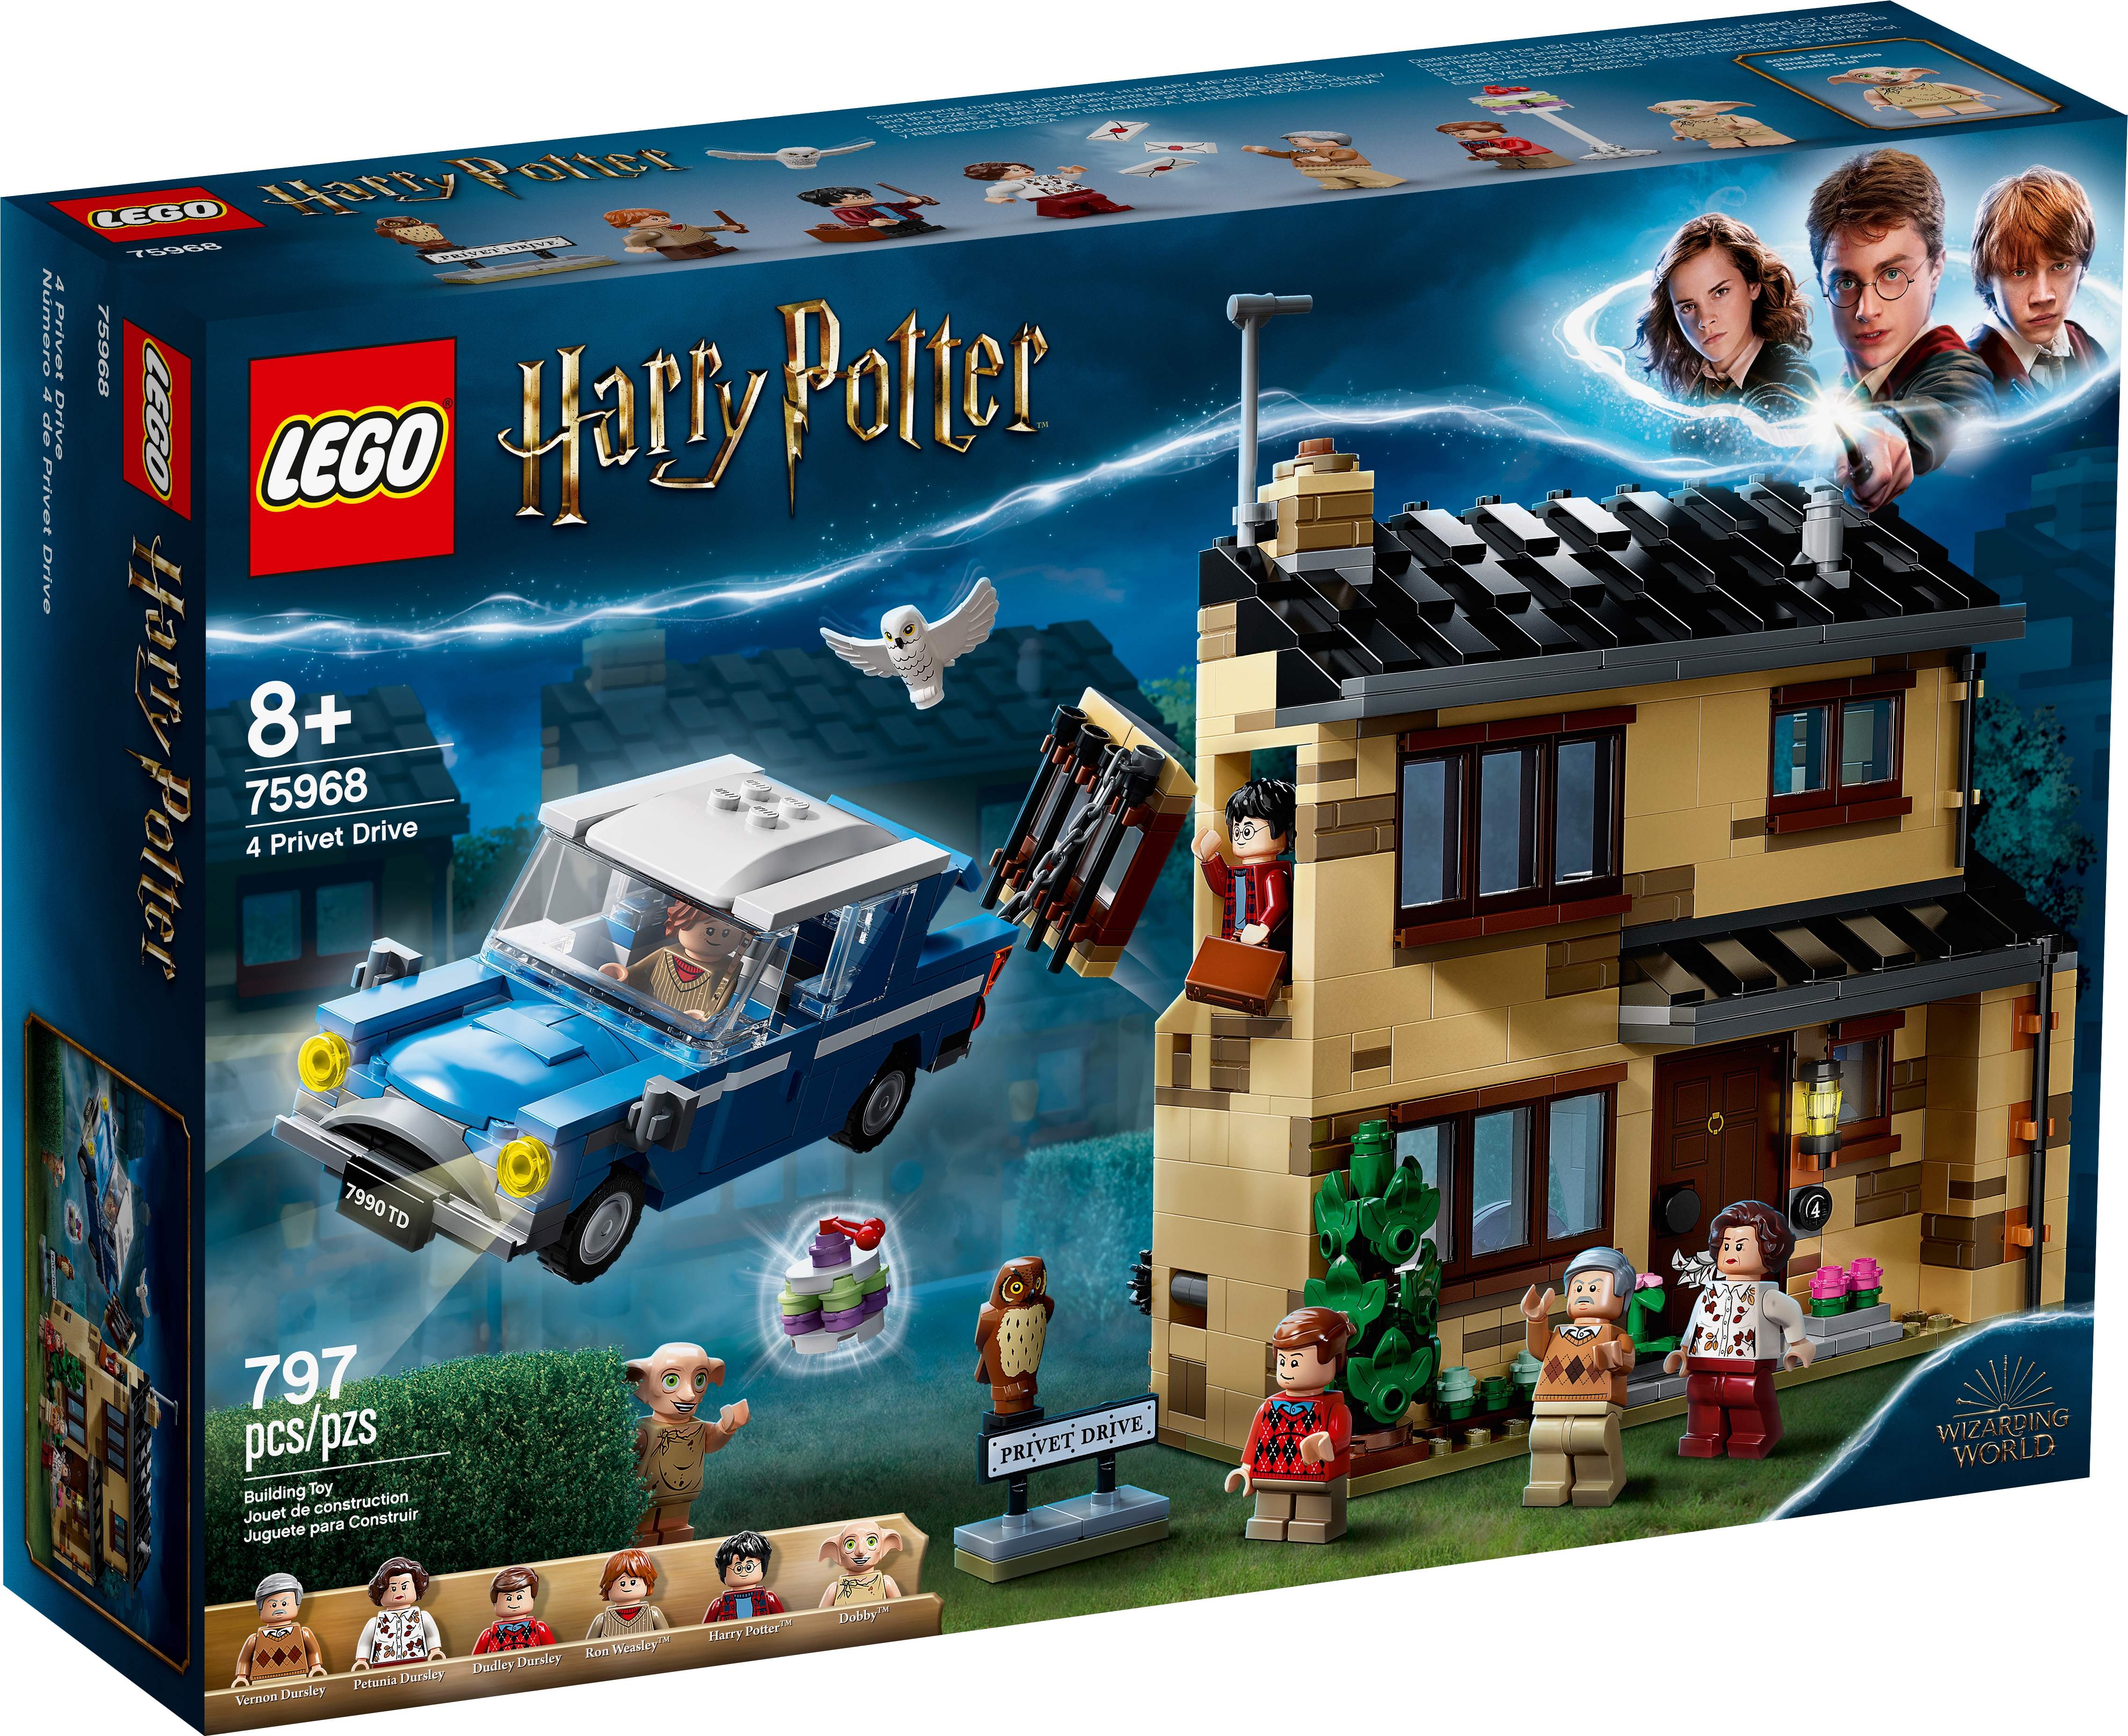 Details about   LED LIGHT KIT FOR LEGO 75968 4 PRIVET DRIVE LEGO Harry Potter Lighting KIT SET 